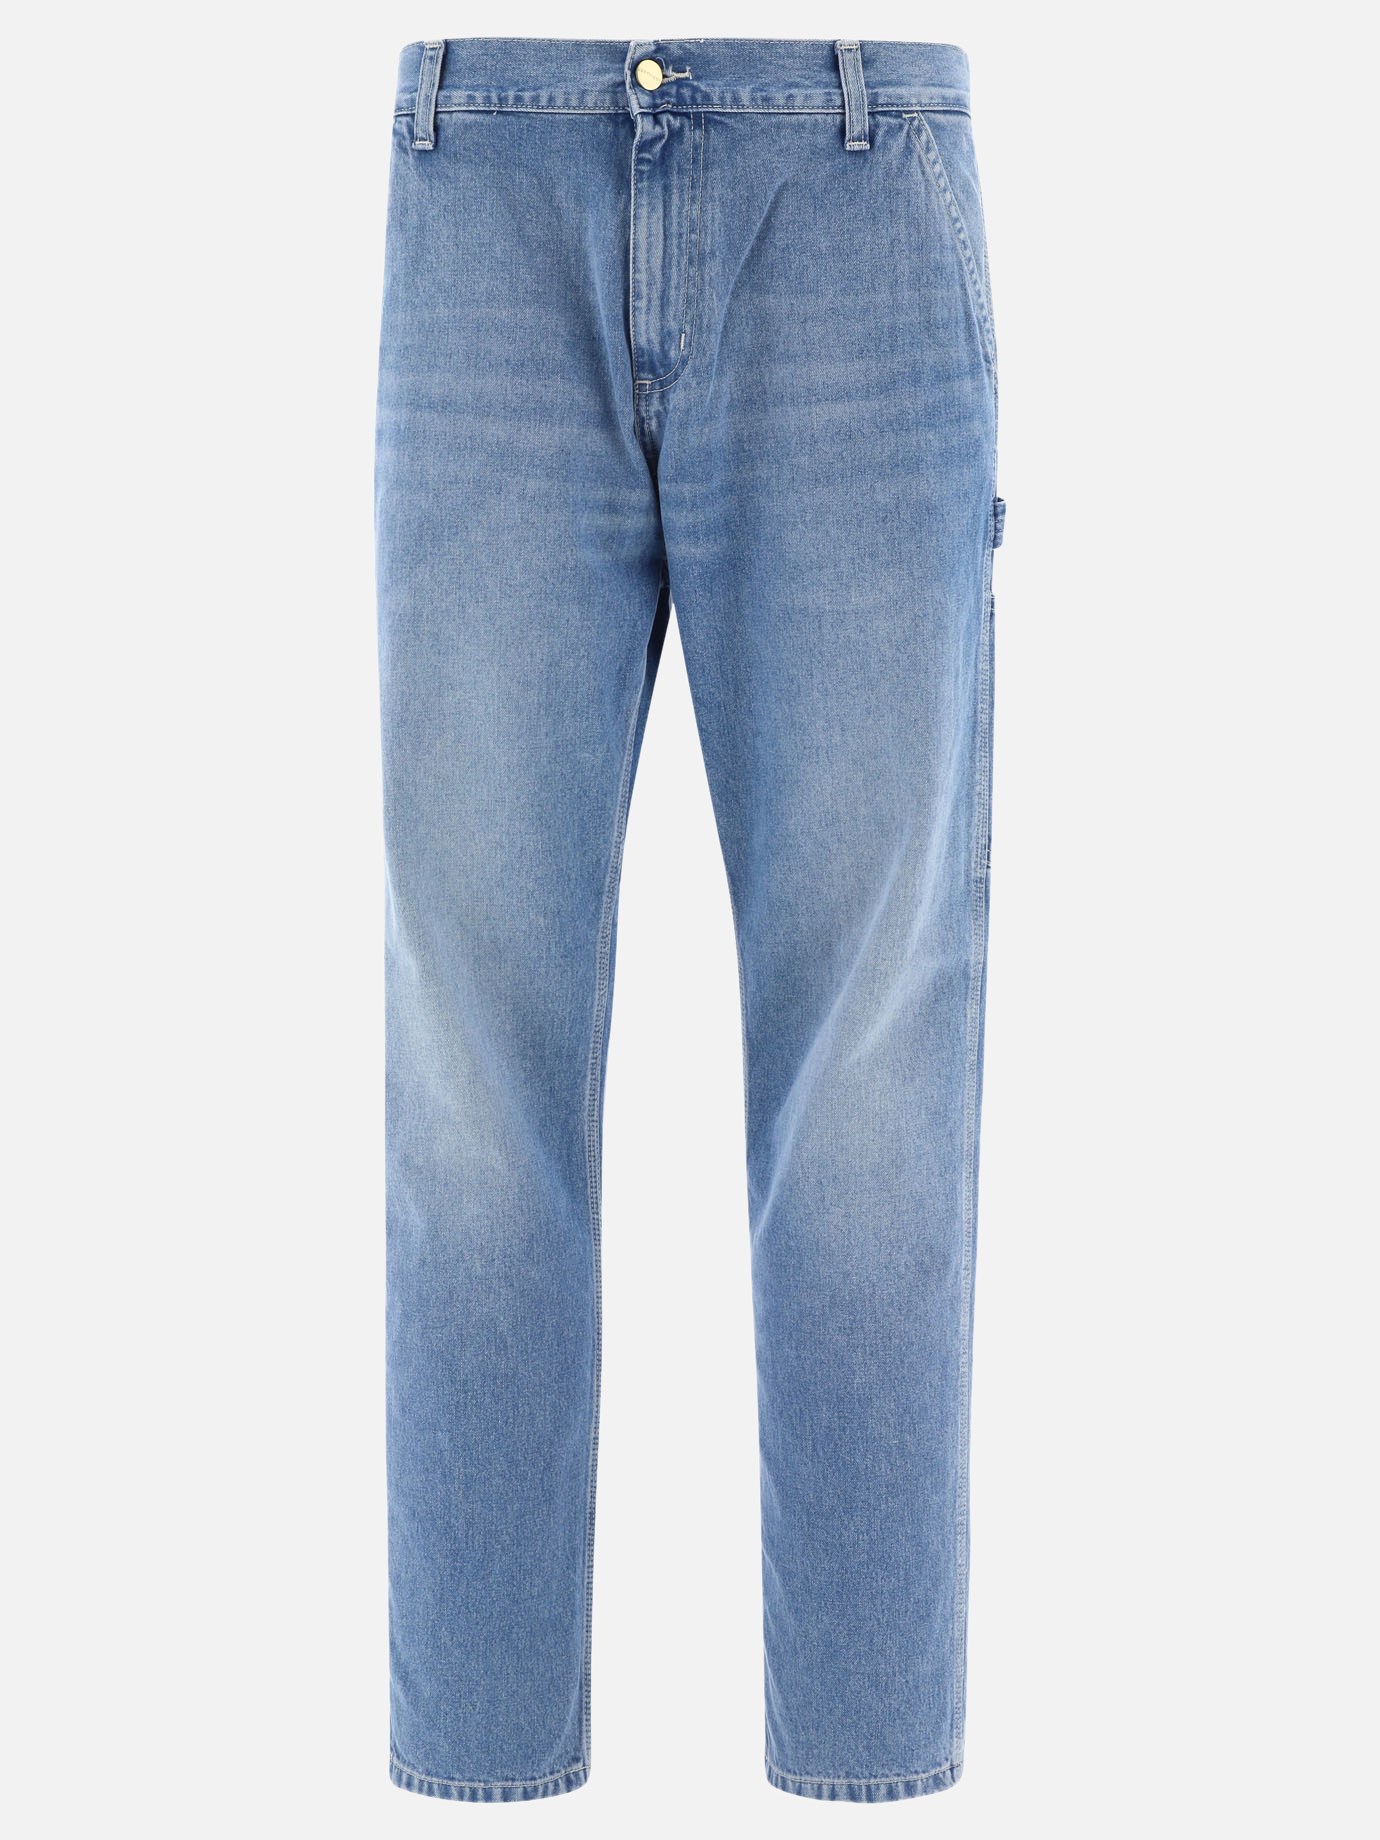 Jeans  Ruck Single Knee by Carhartt WIP - 0